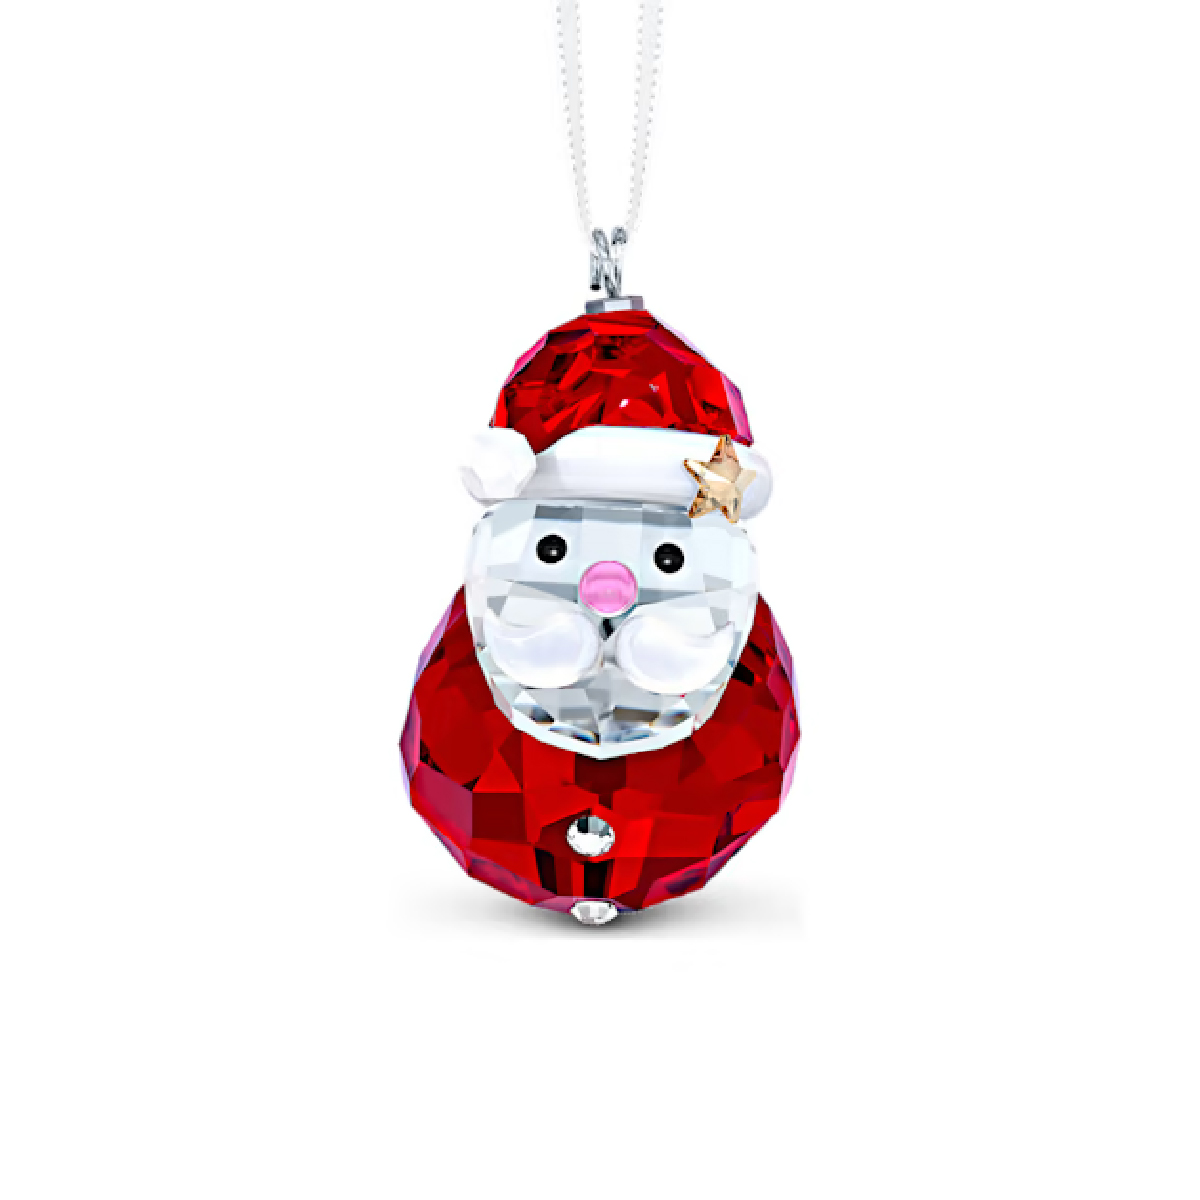 Swarovksi Rocking Santa Claus Ornament